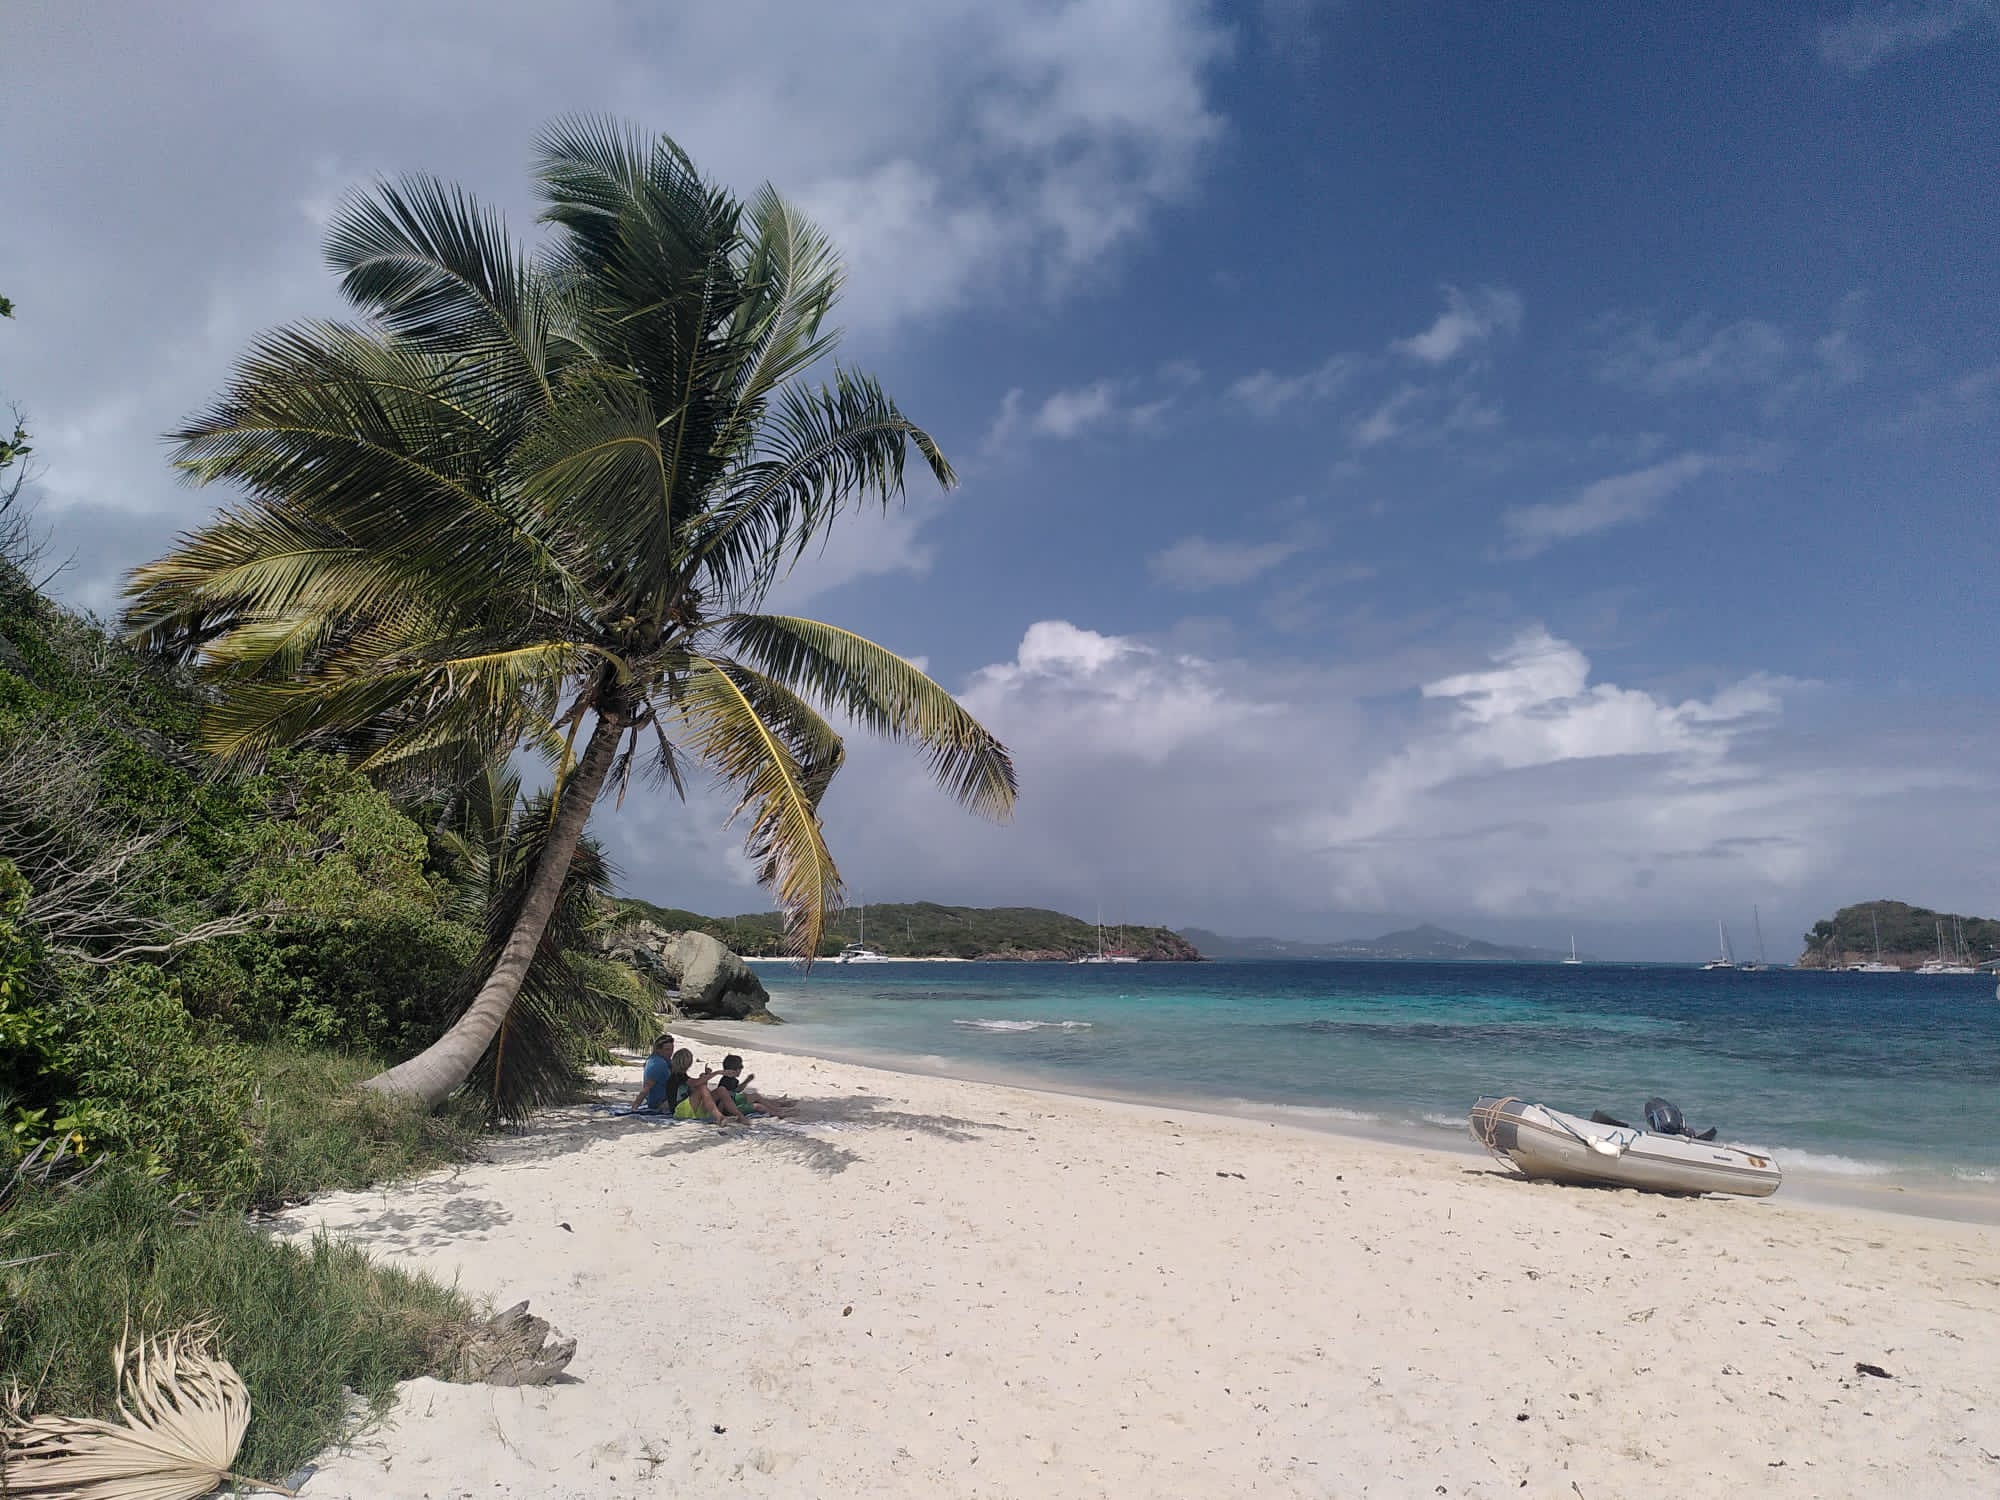 Tobago Cays - Elizabeth Bay/Bequai - Wallilabou Bay/St. Vincent